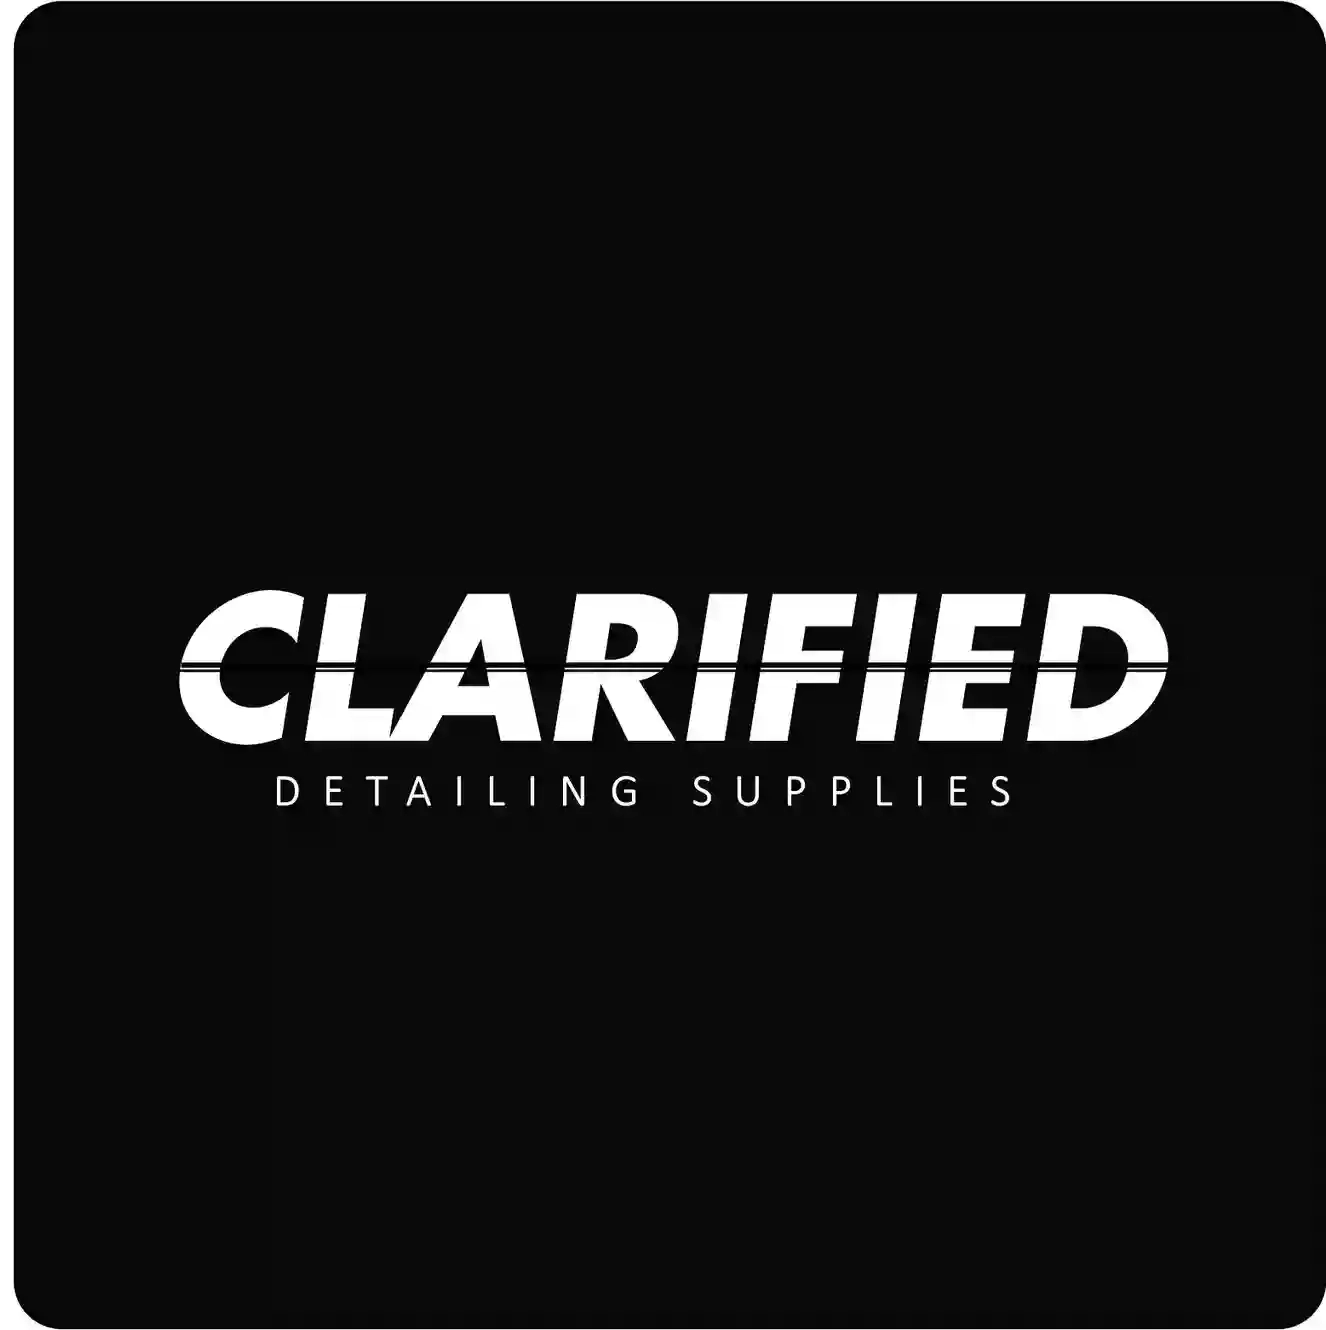 Clarified Detailing Supplies